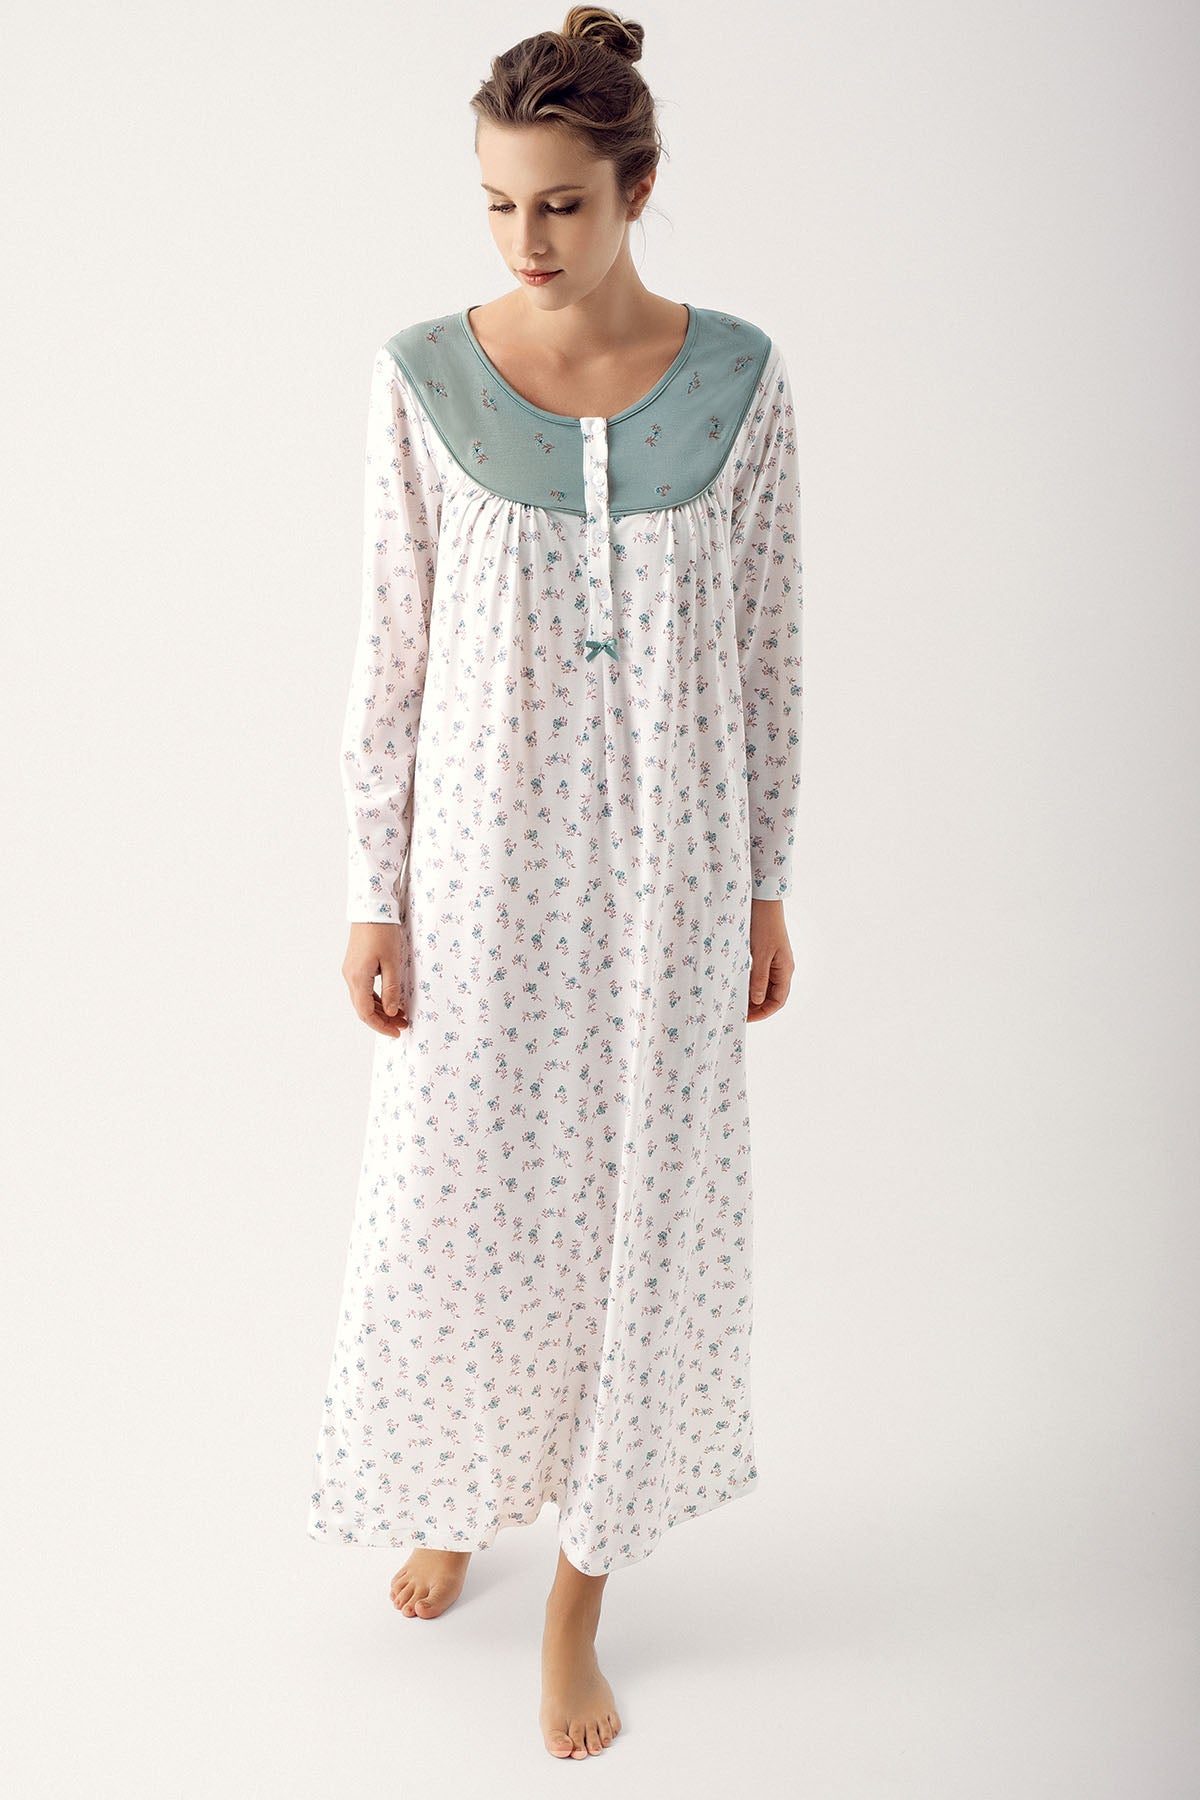 Flower Pattern Plus Size Maternity & Nursing Nightgown Green - 14111